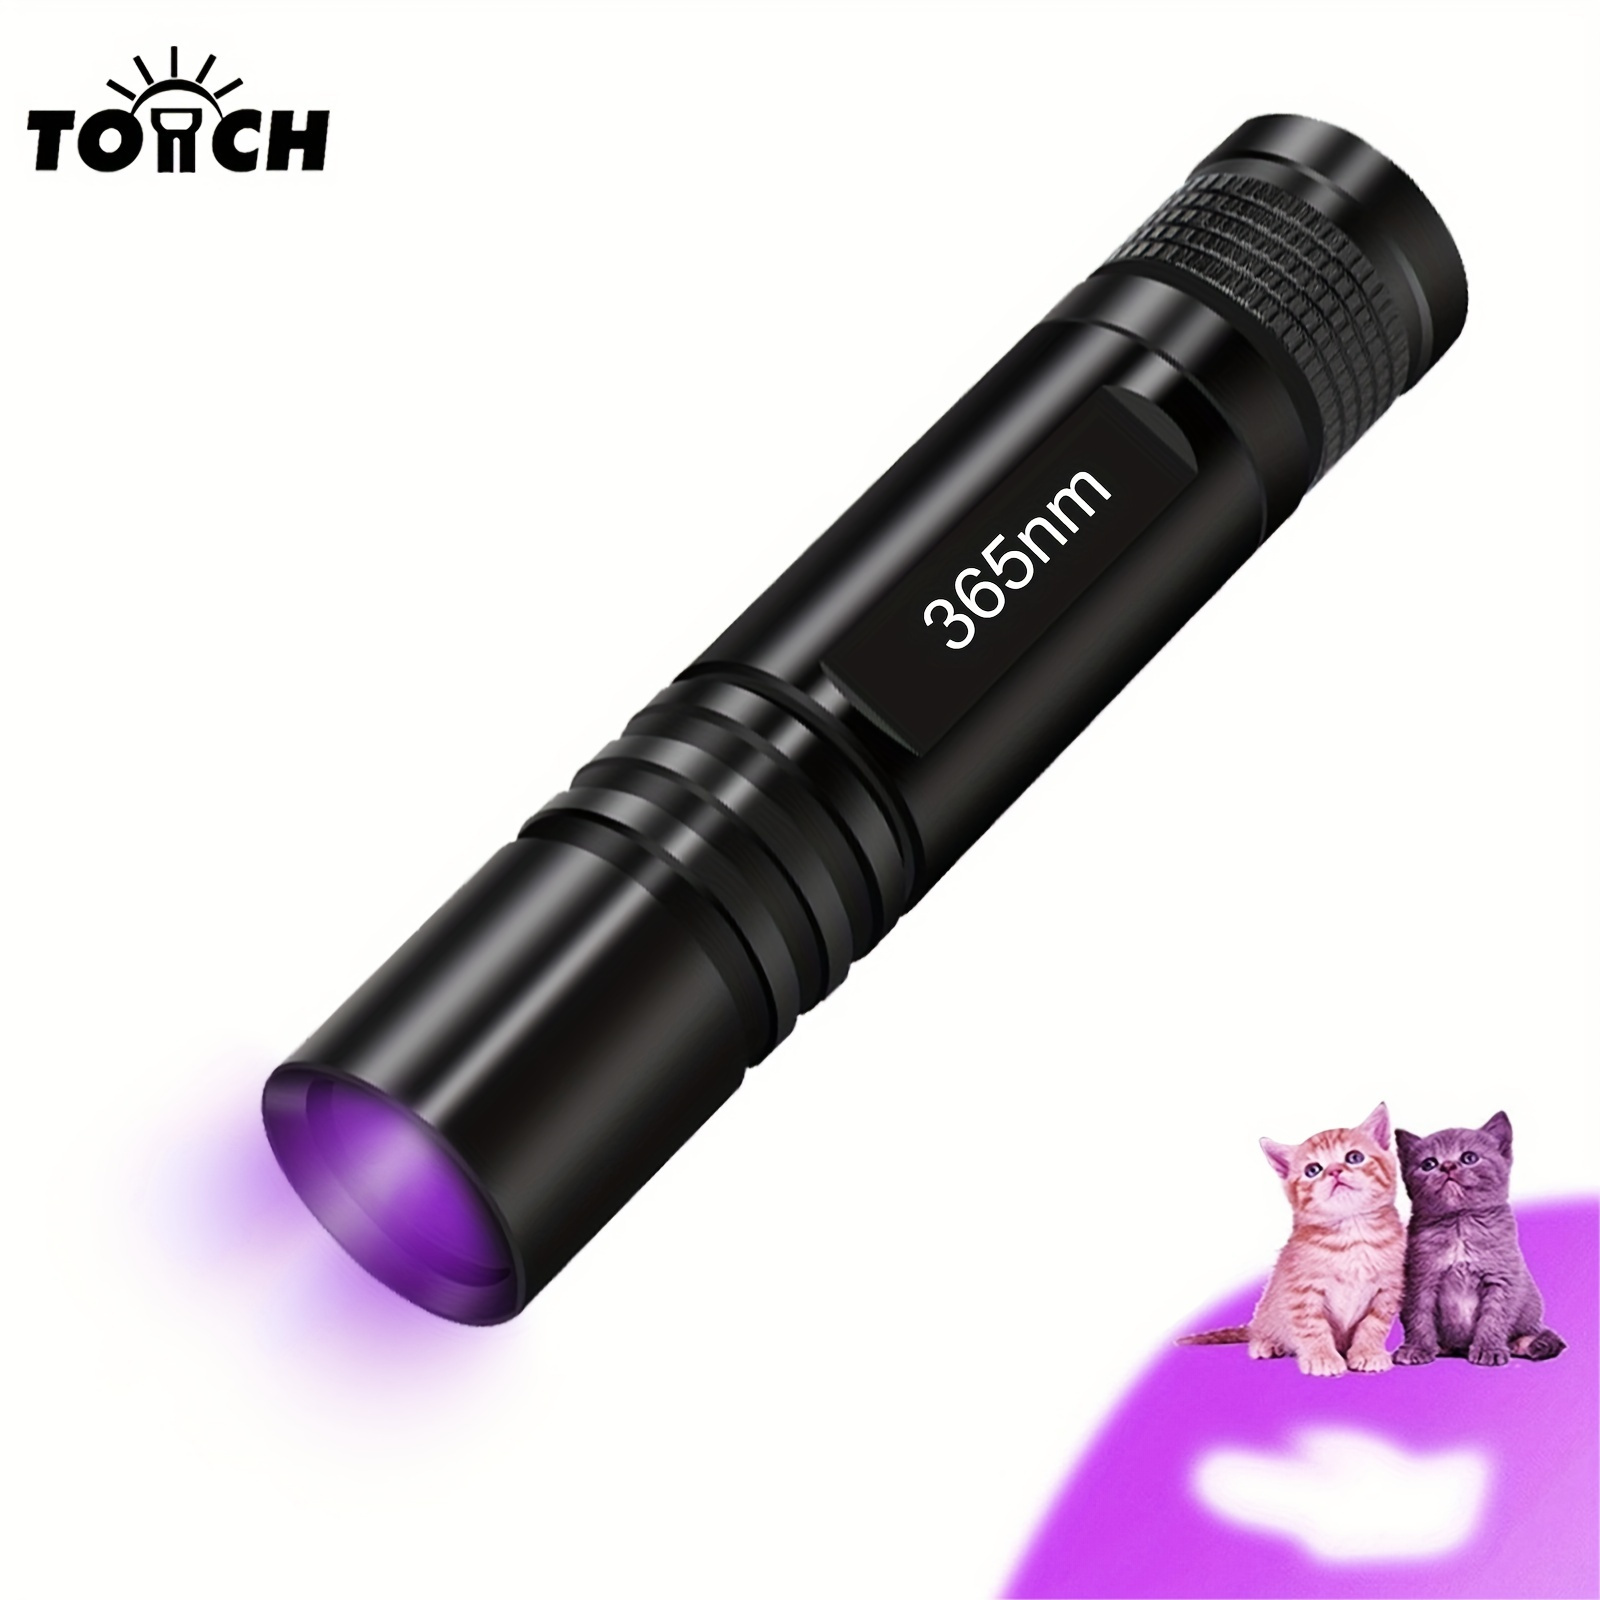 Mini Uv Flashlight 395nm Ultraviolet Torch Rechargeable - Temu